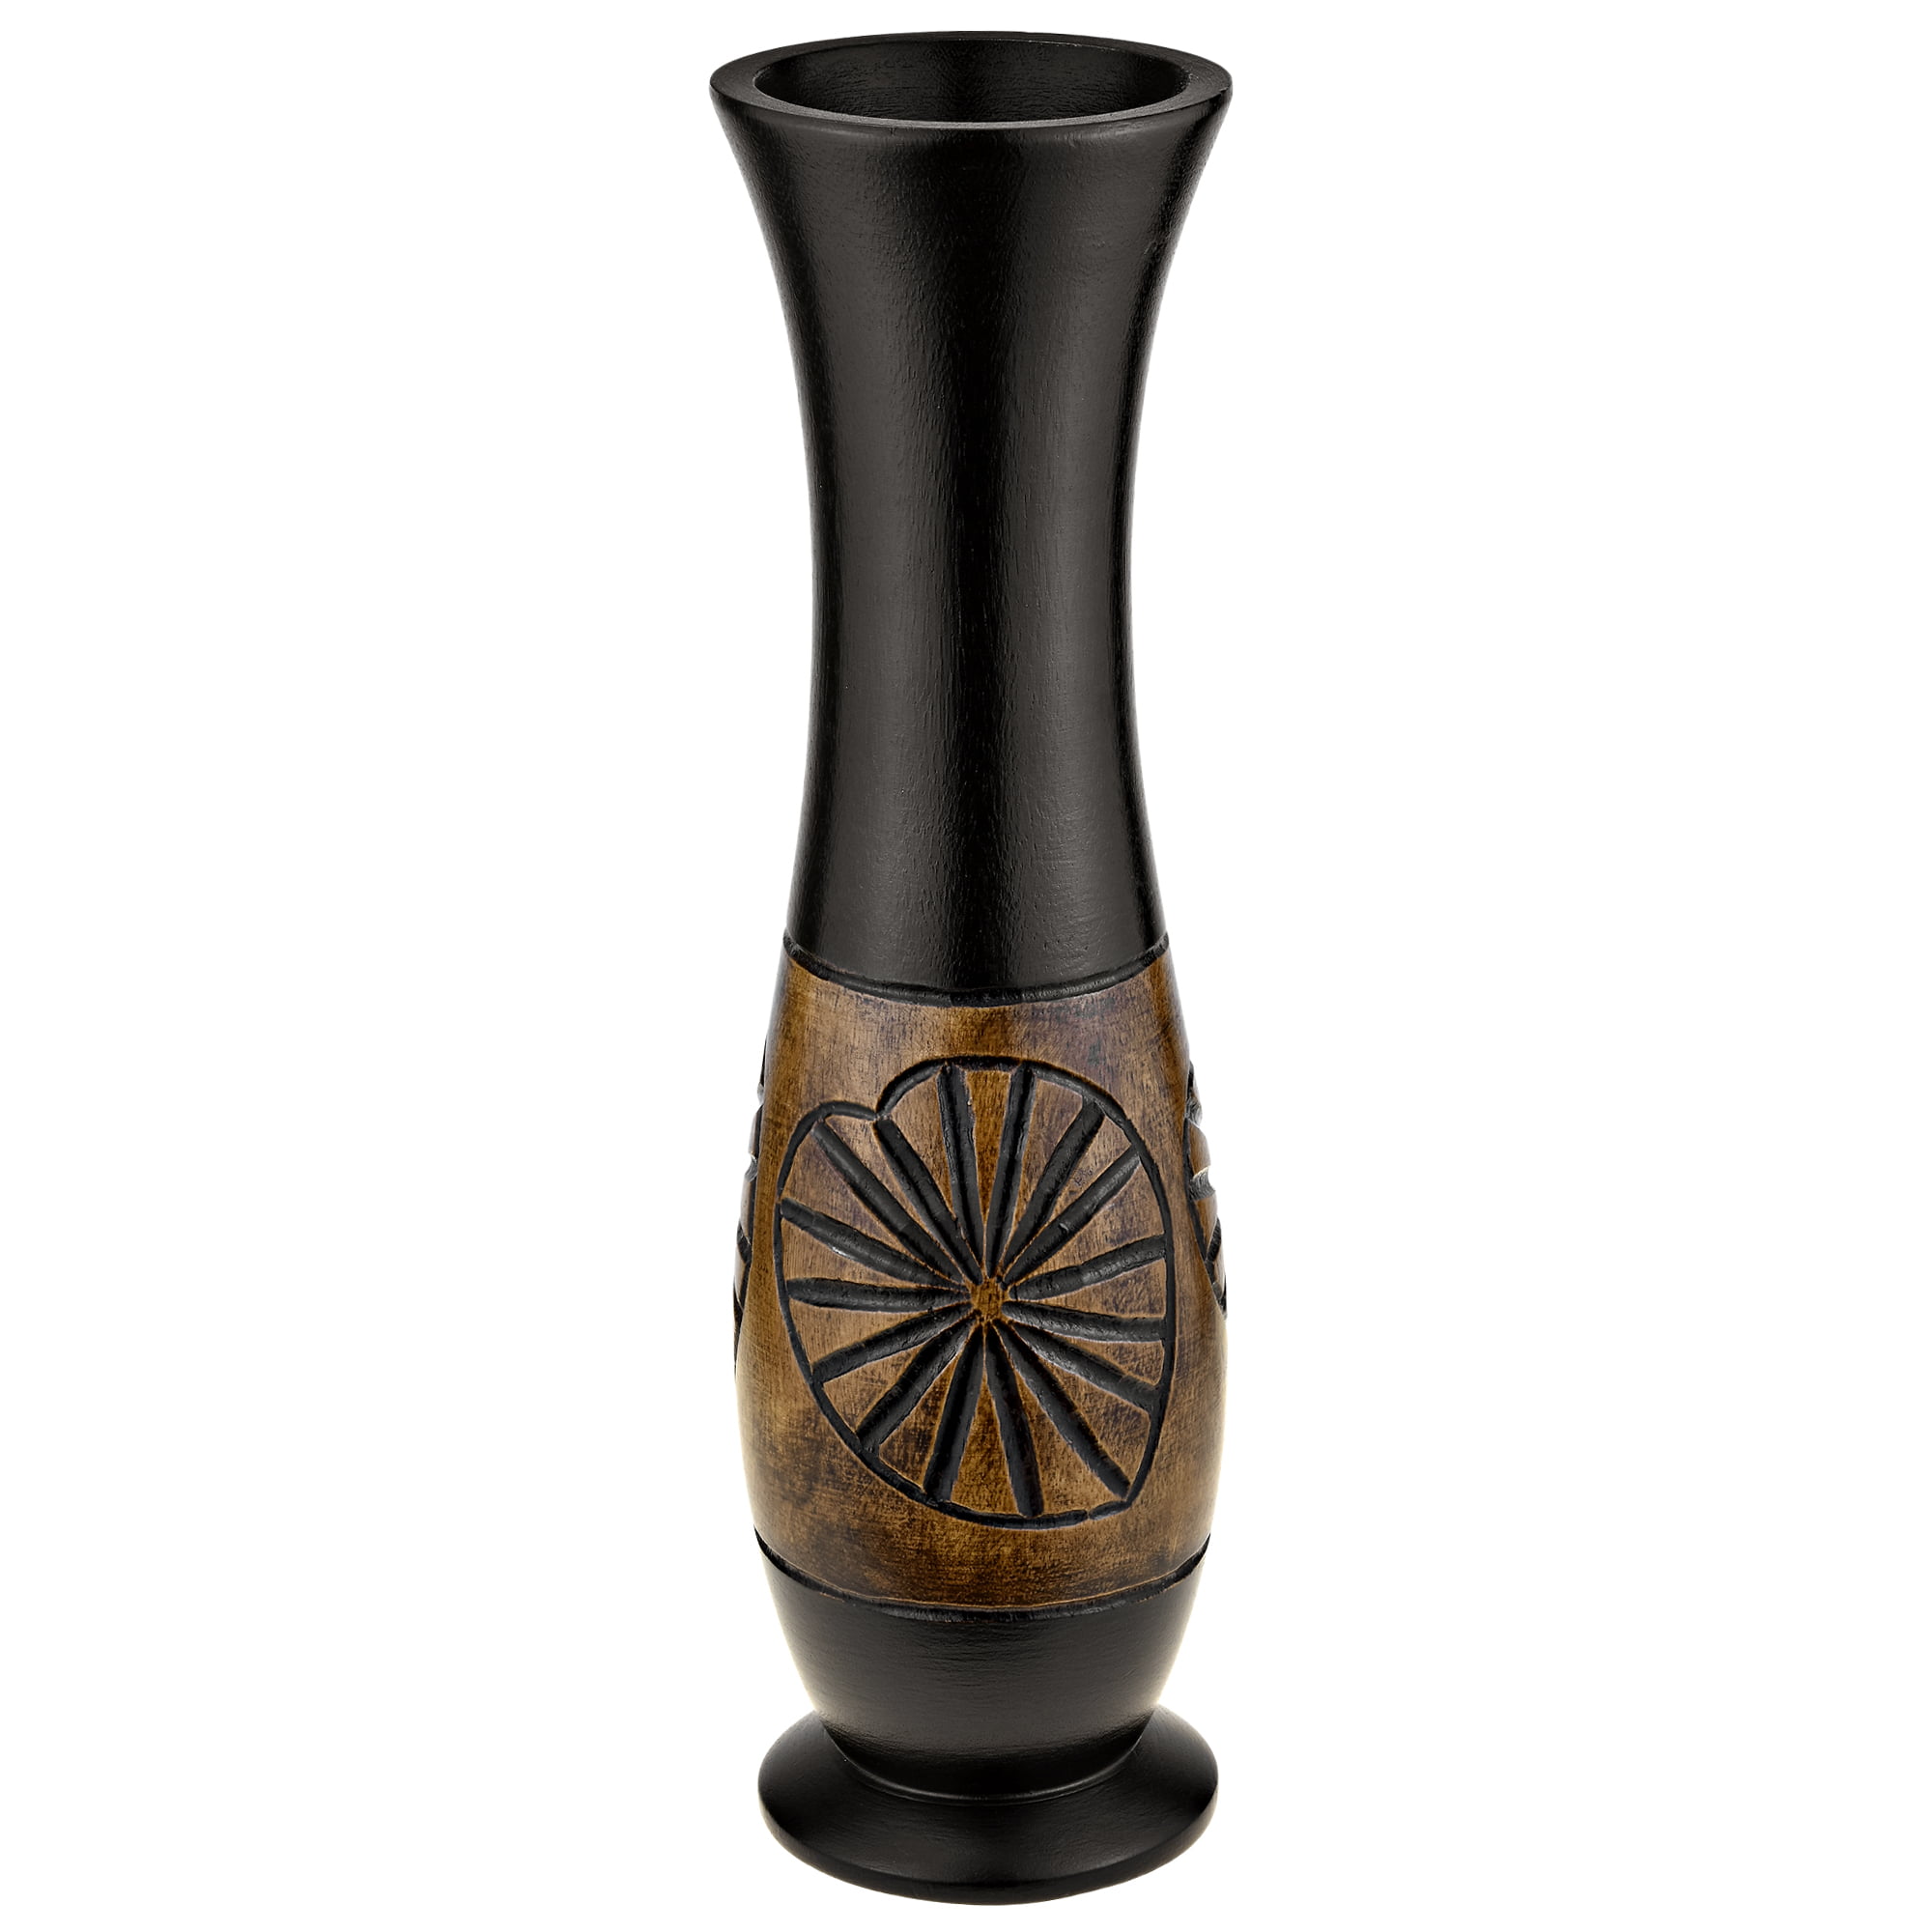 Beautiful Tropical Wooden Vase